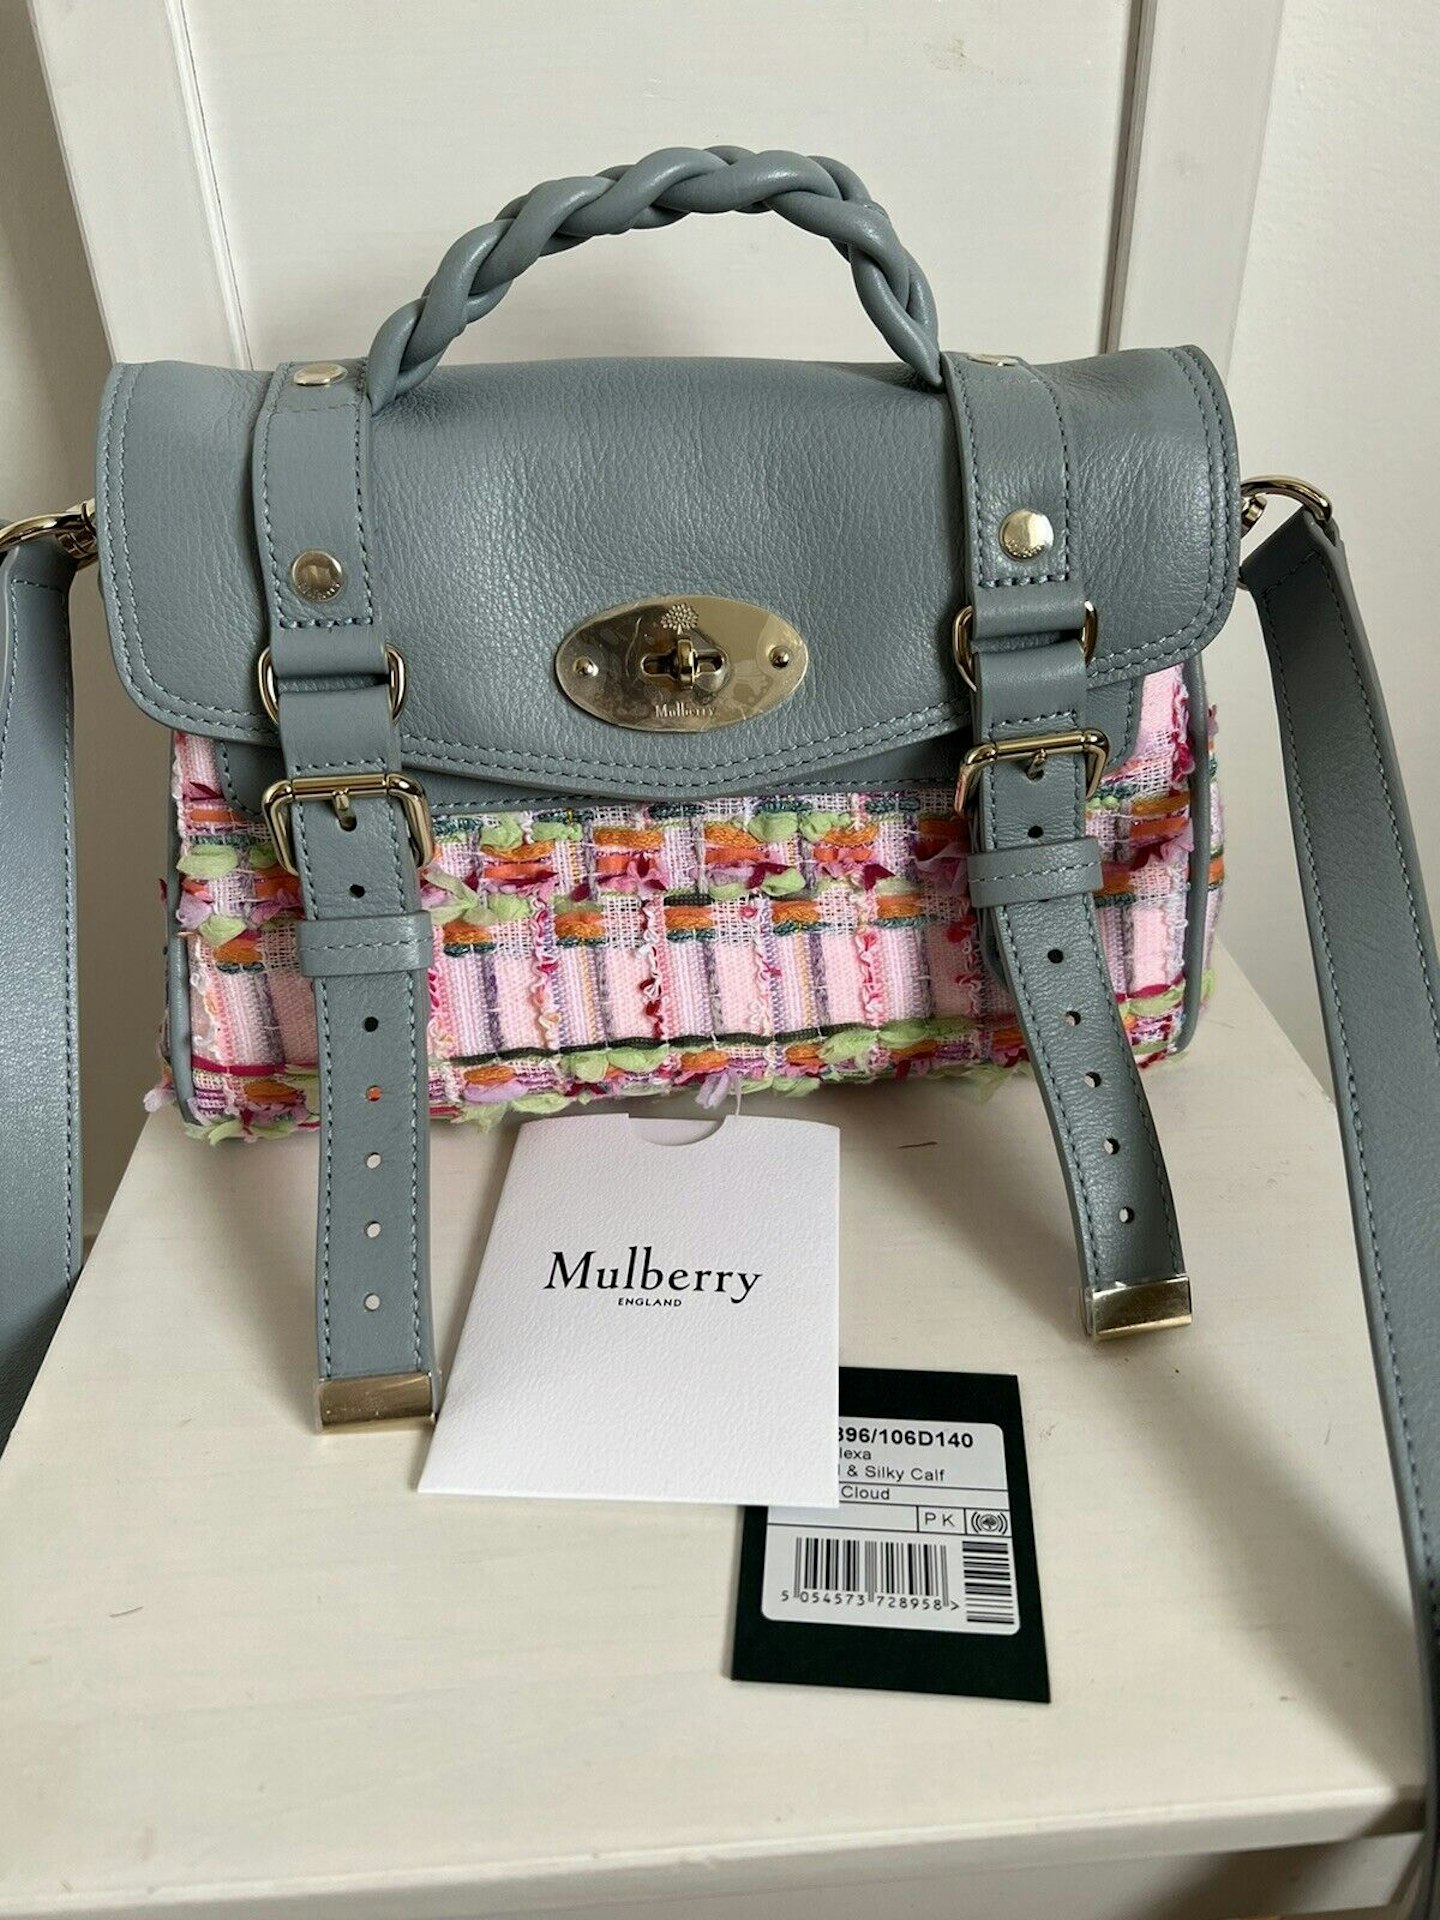 Mulberry, Mini Alexa Bag in Tweed, £575